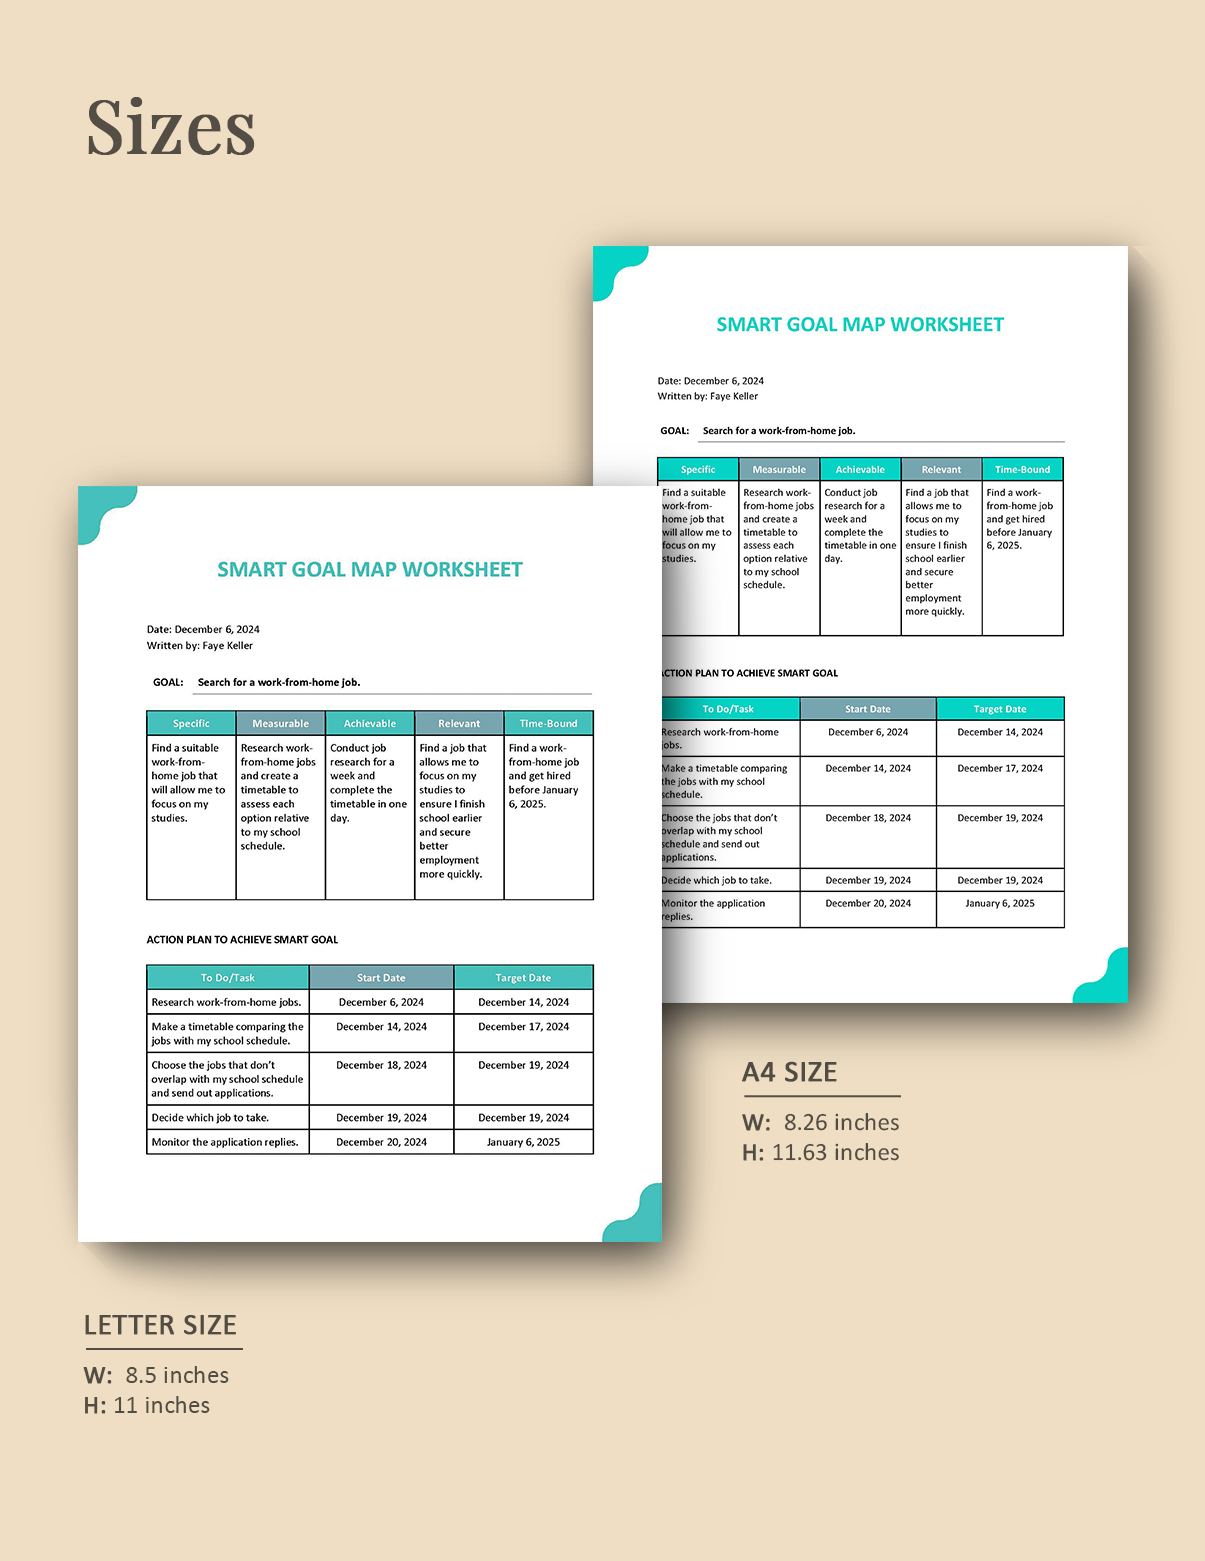 Smart Goal Map Worksheet template